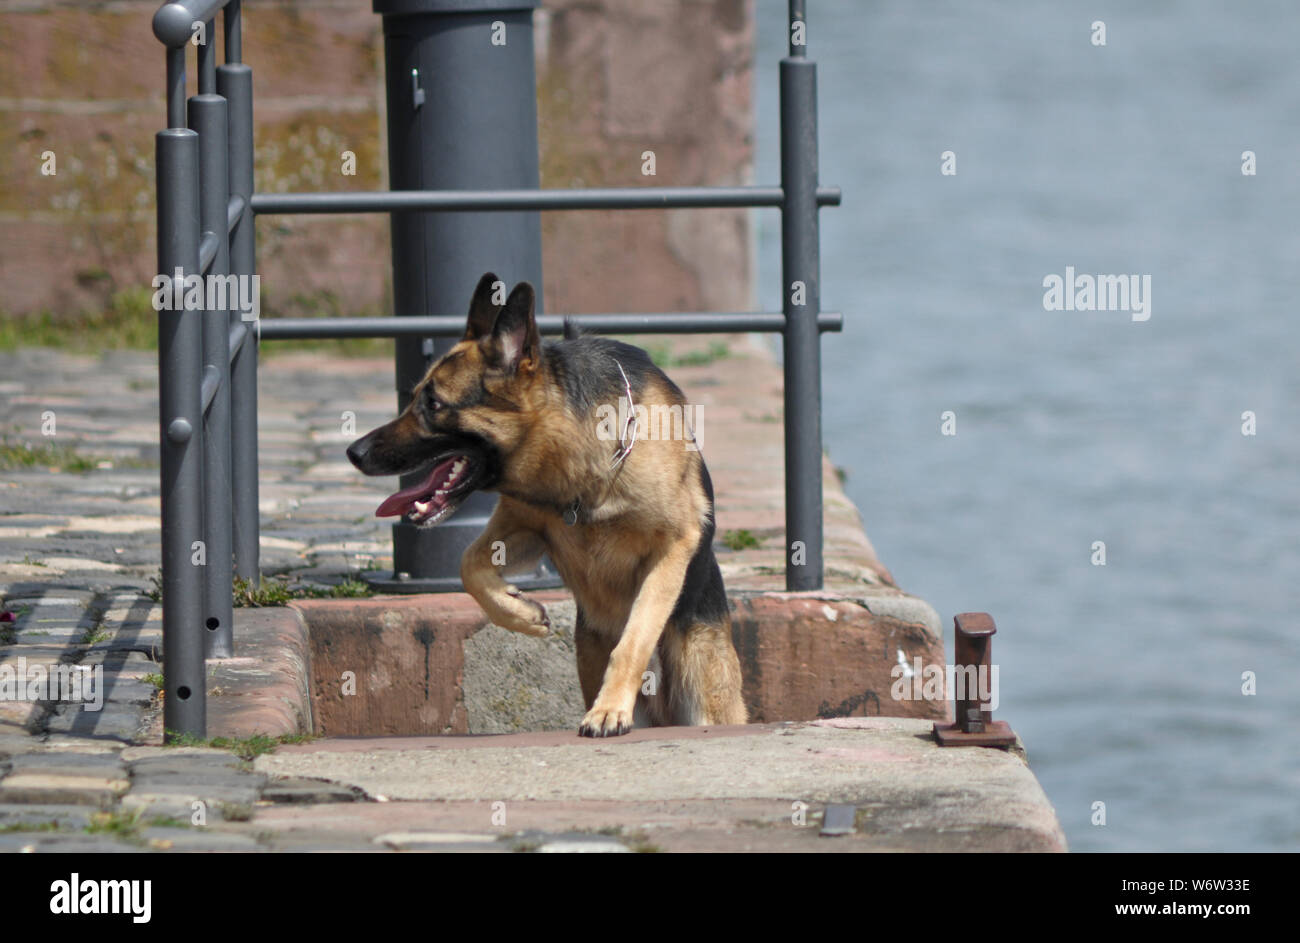 German shepherd dog. Frankfurt, Main riverside. Germany Stock Photo